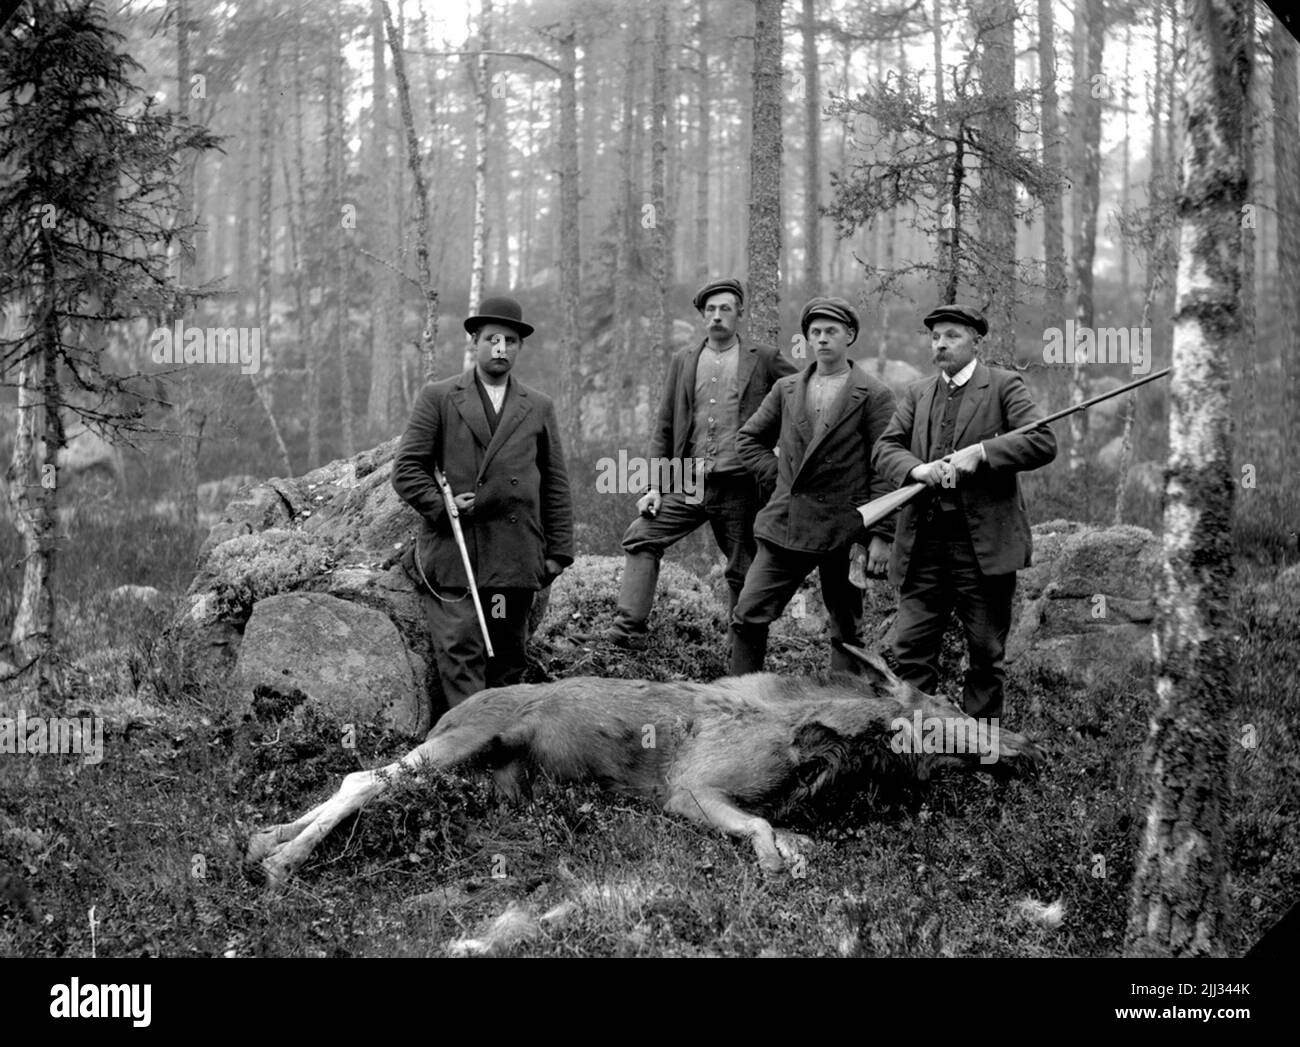 Hunting team, four men on the left: Arvid Stenholm, born 1876-01-08 at Krackgården in Stenstorp, died 1931-04-05 in Svennevad.mannen on the right: G F Hallberg, born 1860-03-13 in Regna. D.1934-04-17 at Northern Hyddan in Svennevad. Stock Photo